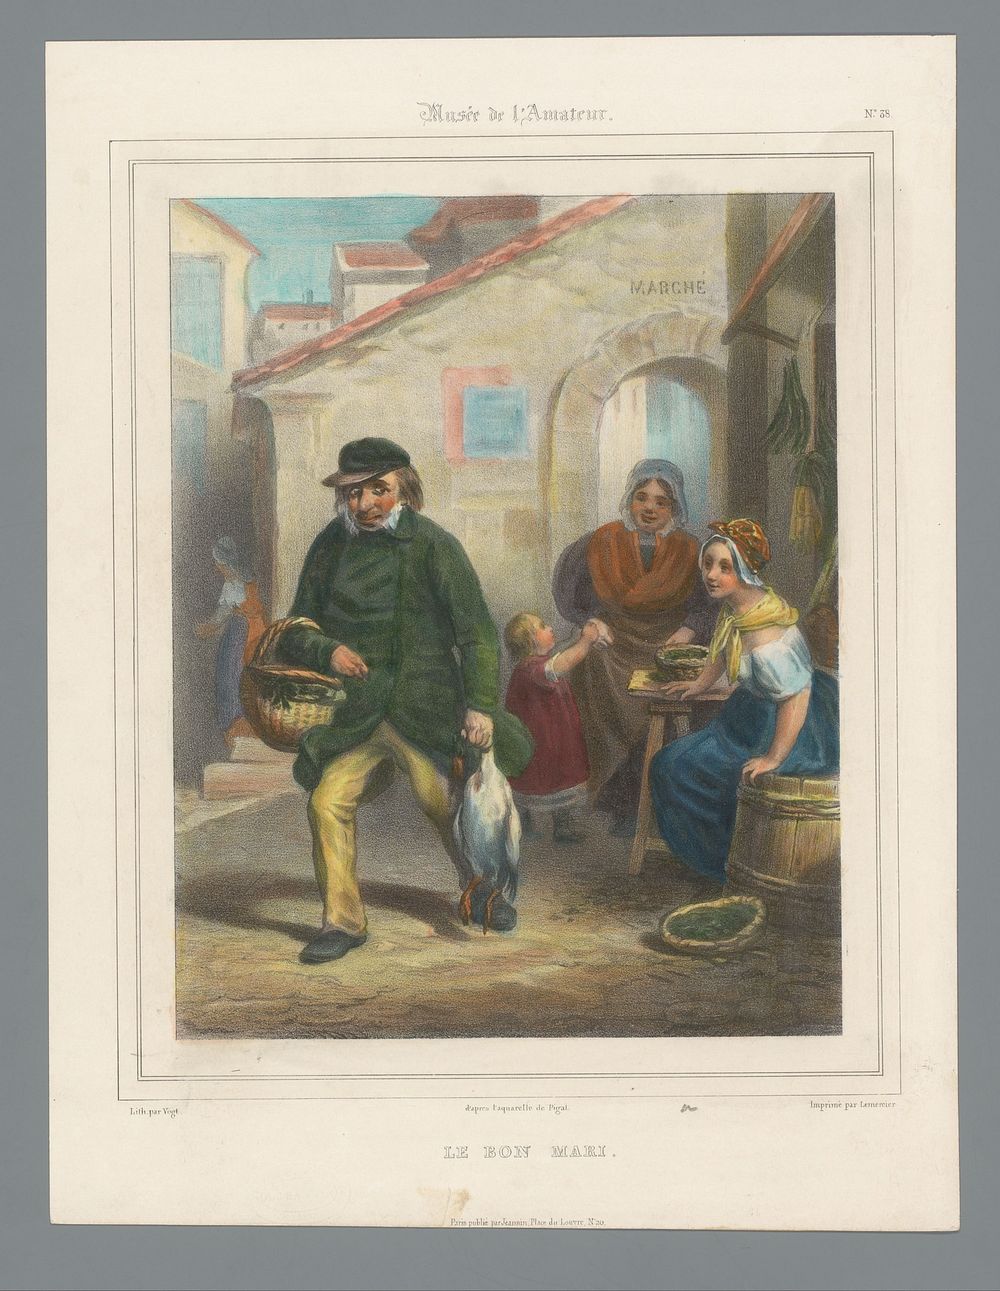 Man komt van de markt met volle boodschappenmand en gans (1837 - 1843) by Charles Vogt, Edme Jean Pigal, Joseph Rose…